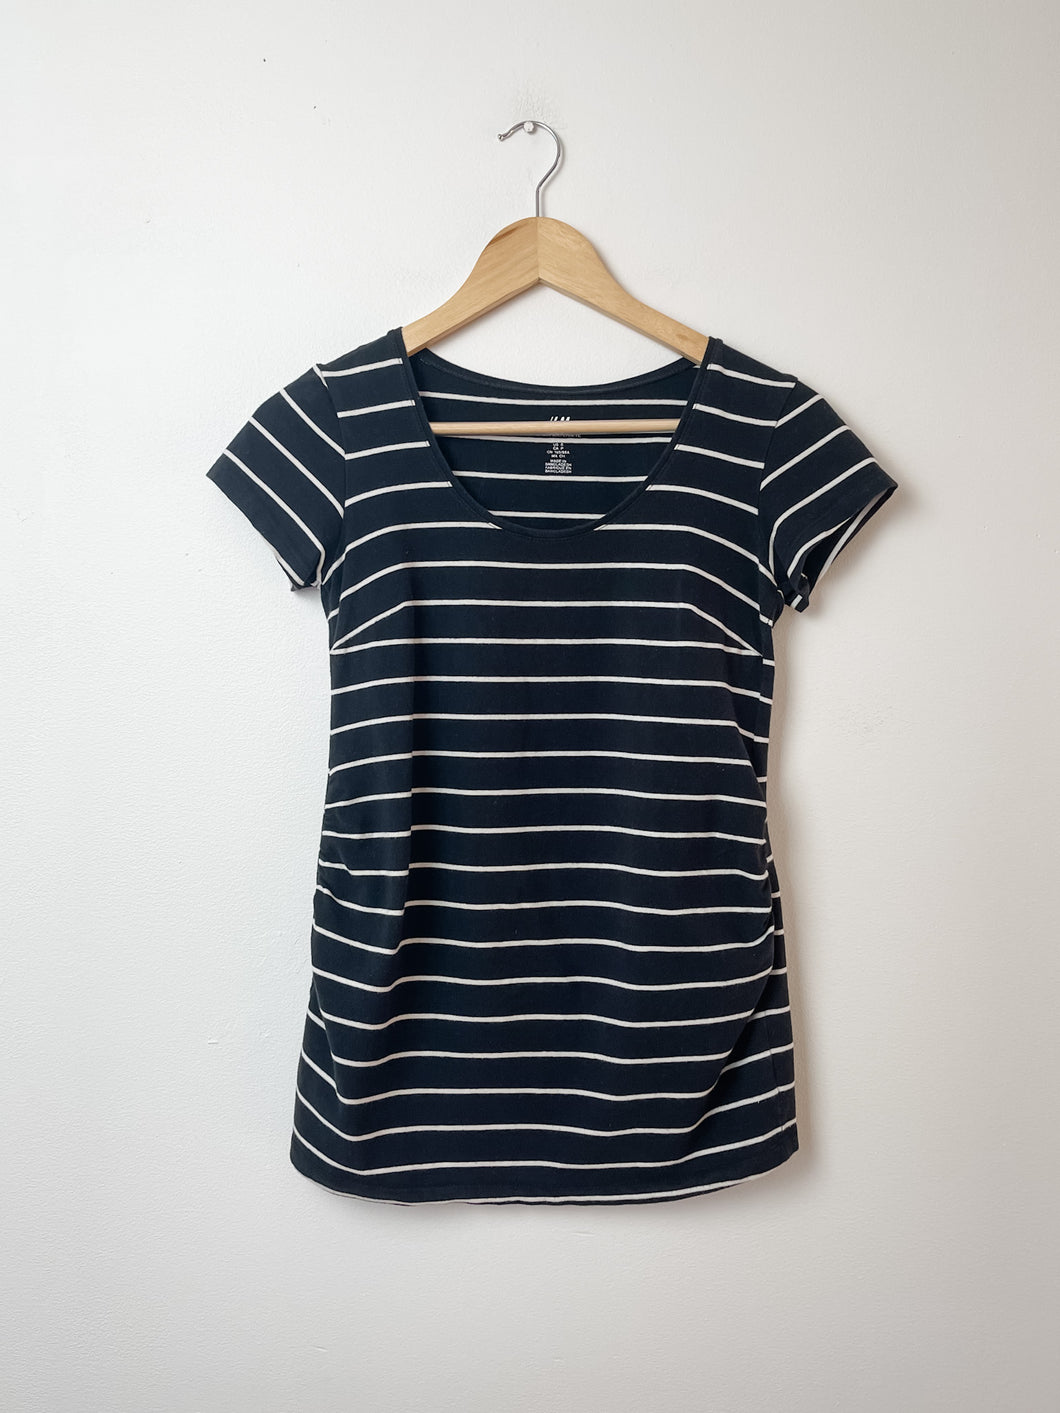 Striped H&M Maternity Shirt Size Small